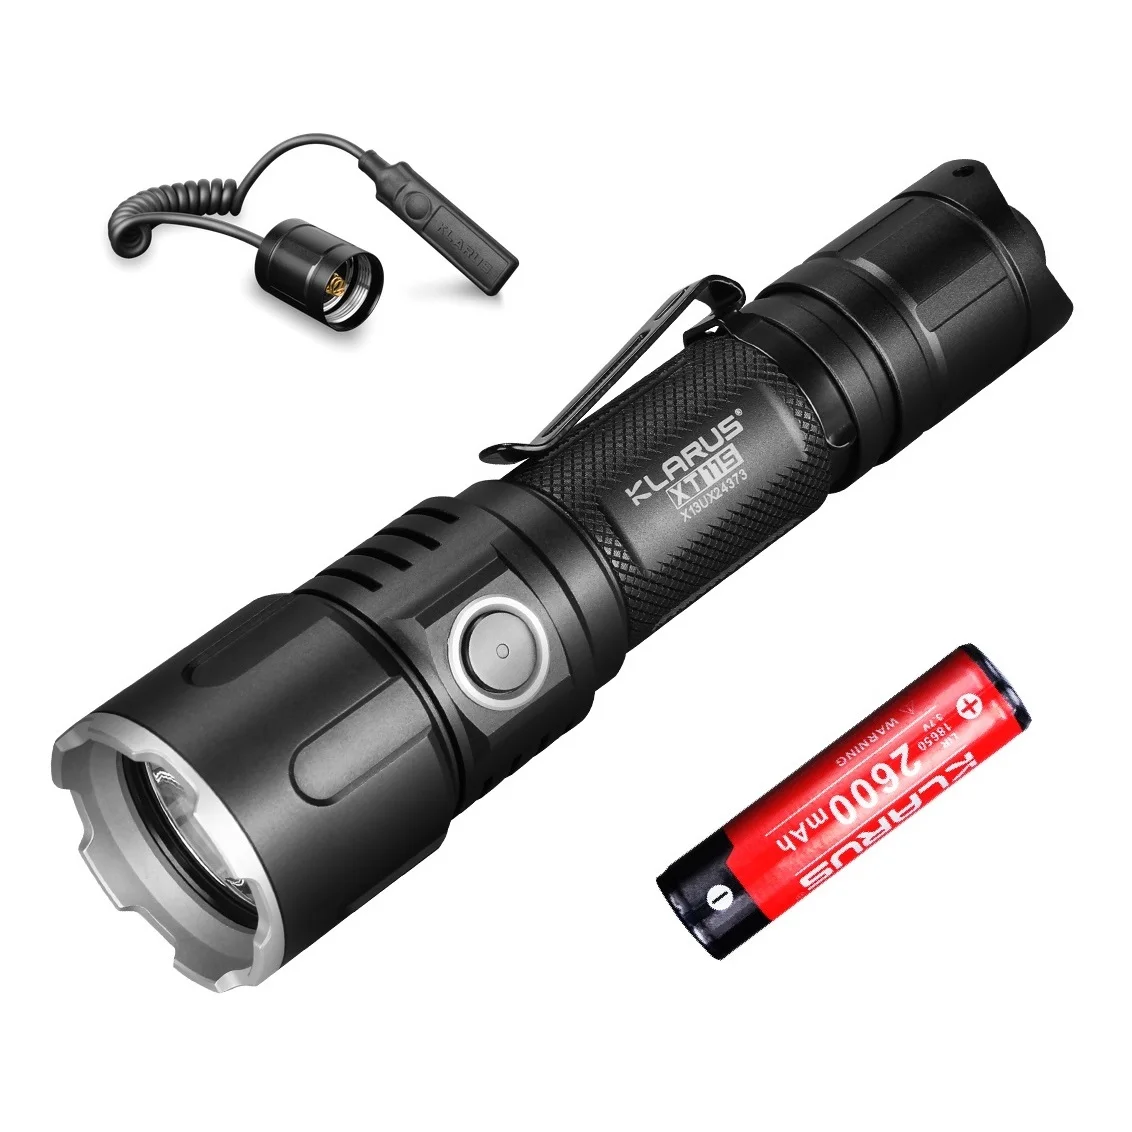 

KLARUS XT11S LED Flashlight CREE XP-L HI V3 1100LM Rechargeable Lanterna Tactical Flashlight with 18650 Battery for Self Defense